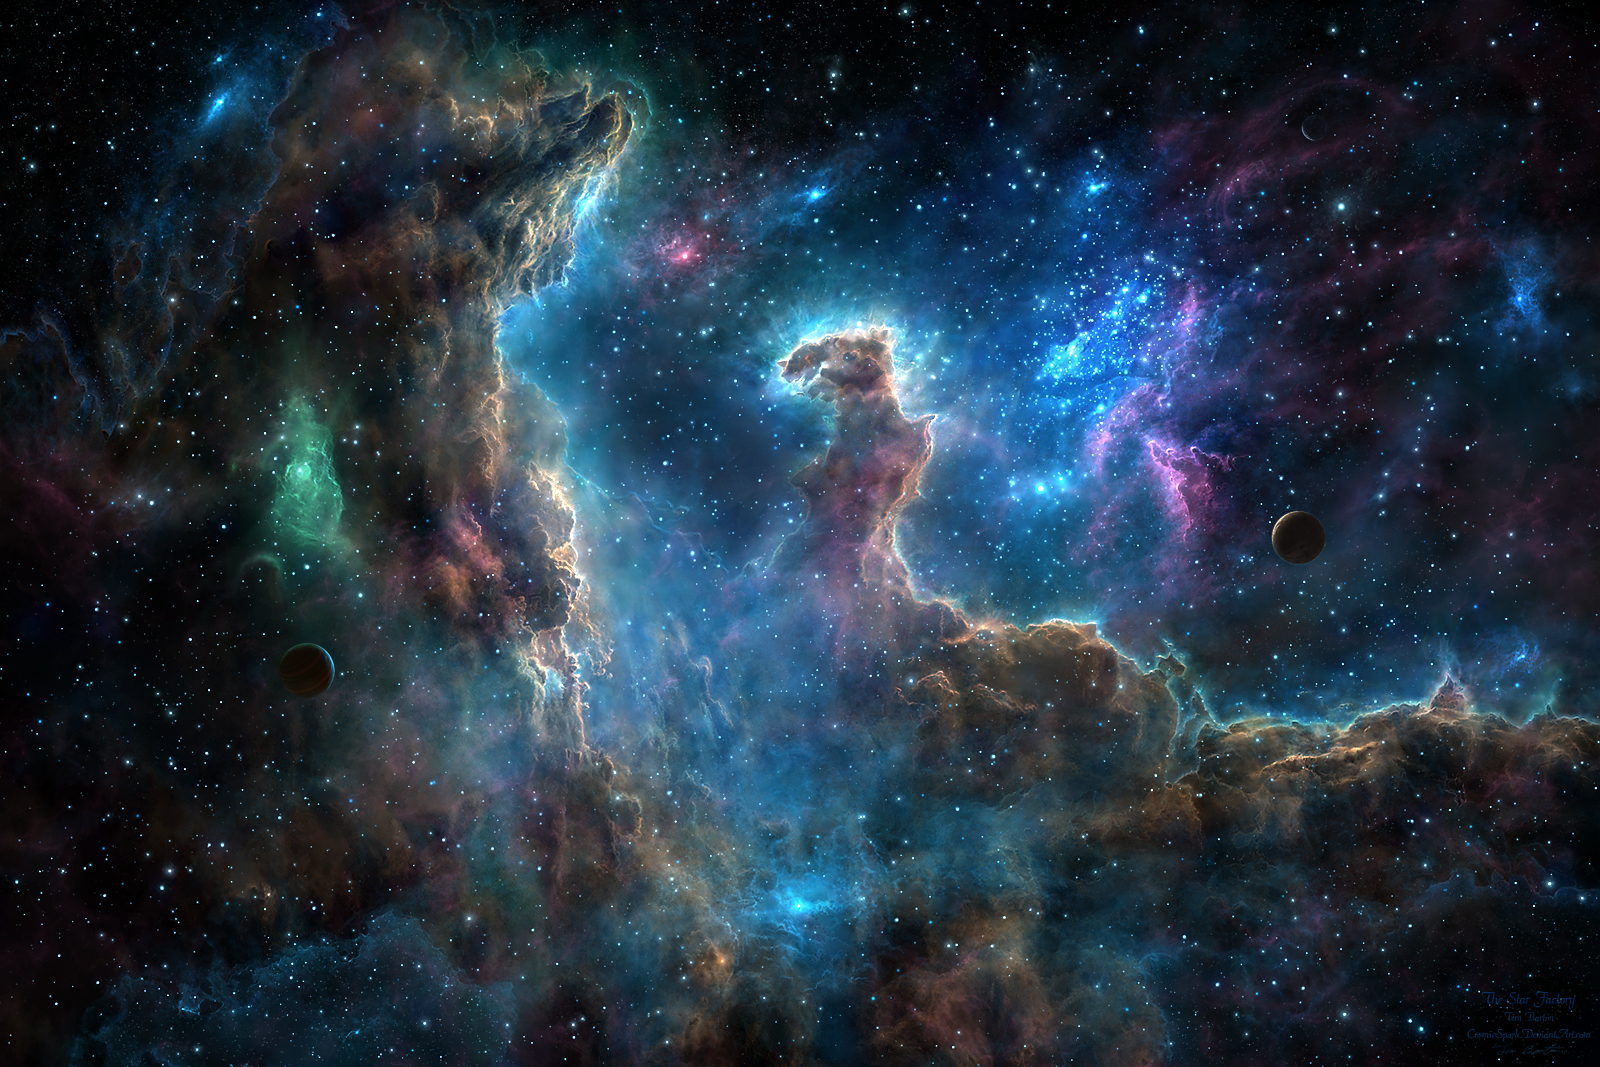 Space Nebula by Tim Barton